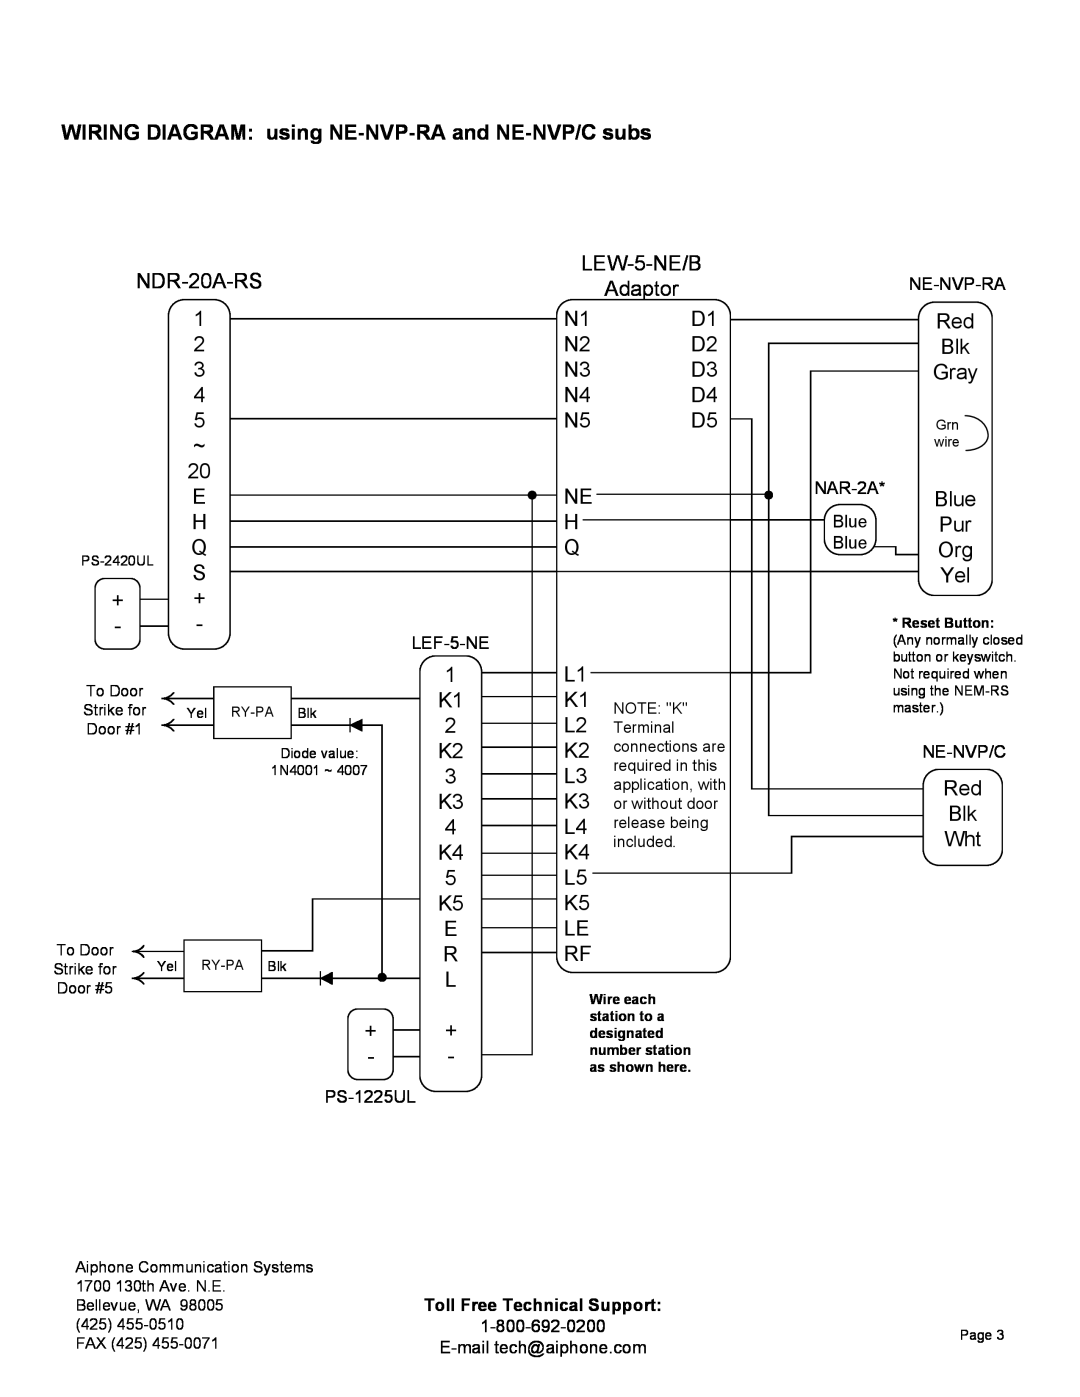 Aiphone LEW-5-NE, LEF-5-NE manual WIRING DIAGRAM using NE-NVP-RAand NE-NVP/Csubs 